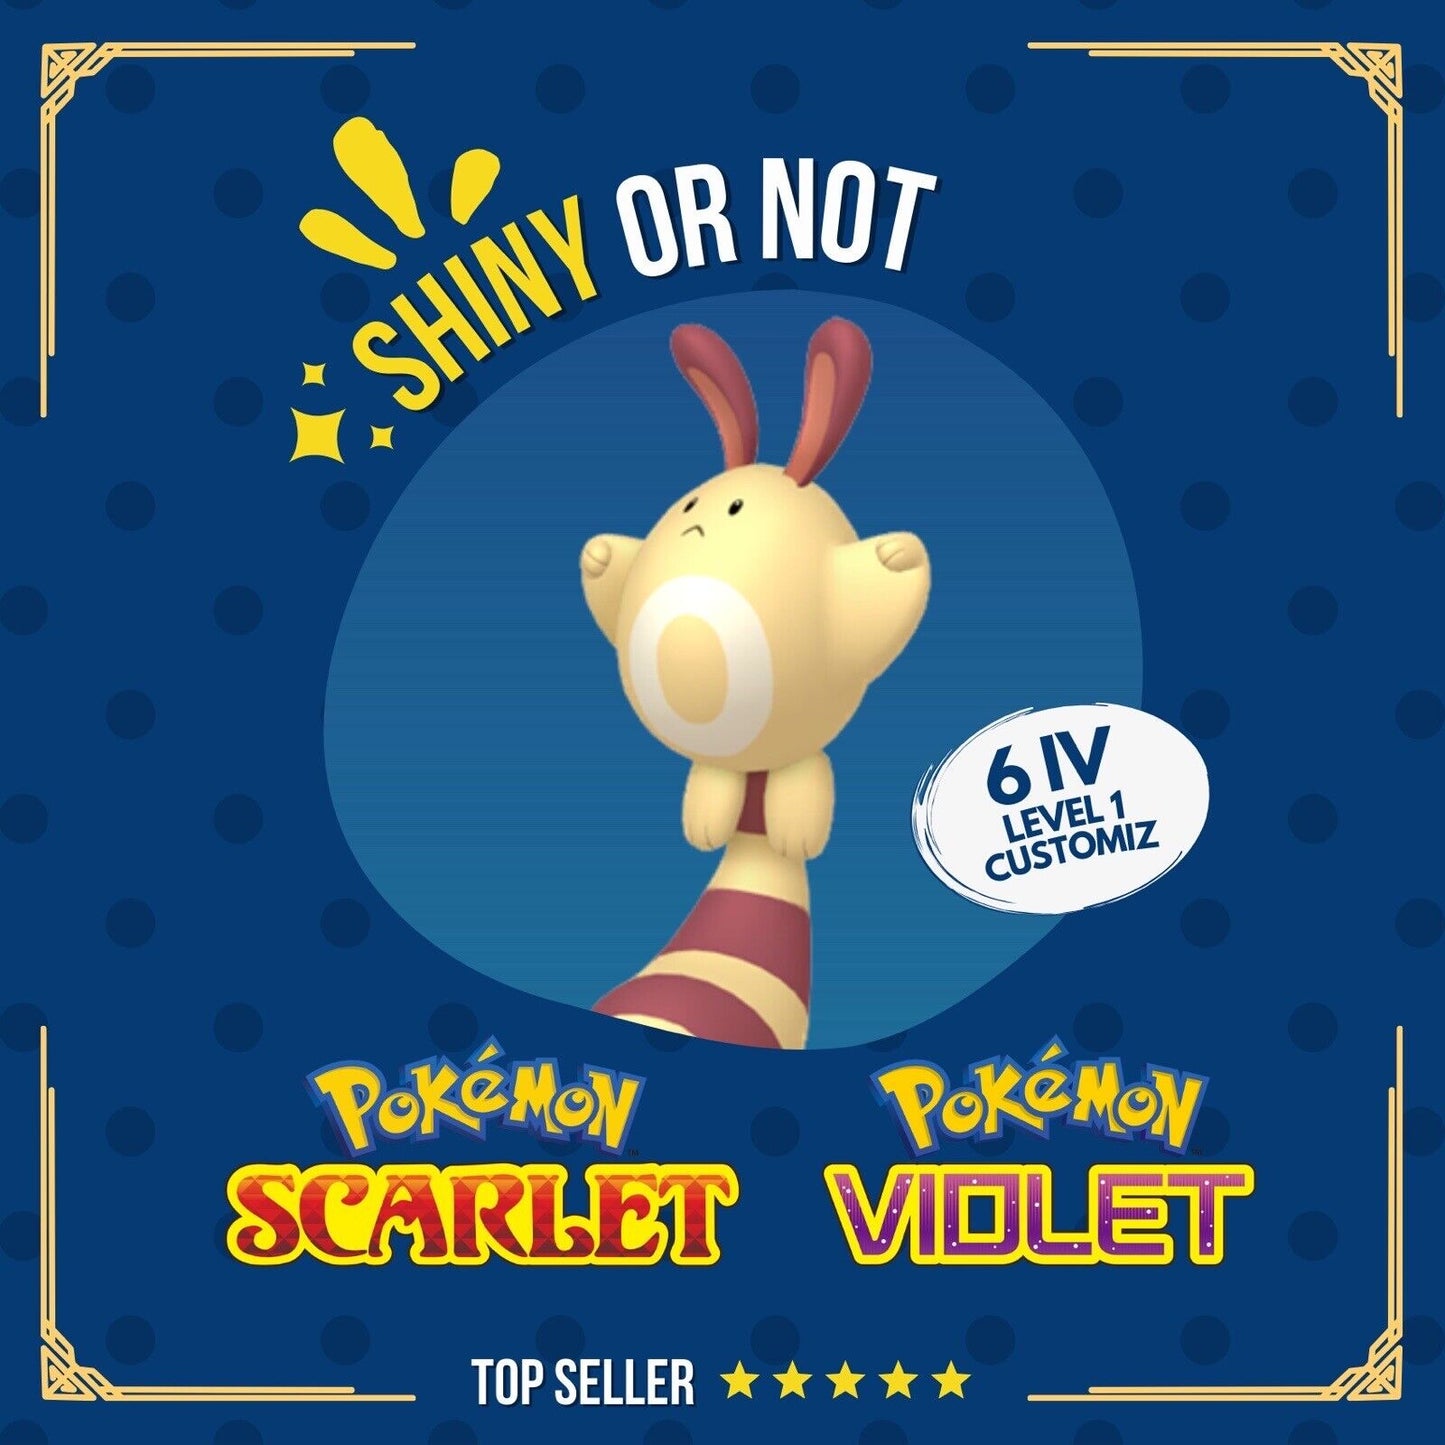 Sentret Shiny or Non ✨ 6 IV Customizable Nature Level OT Pokémon Scarlet Violet by Shiny Living Dex | Shiny Living Dex